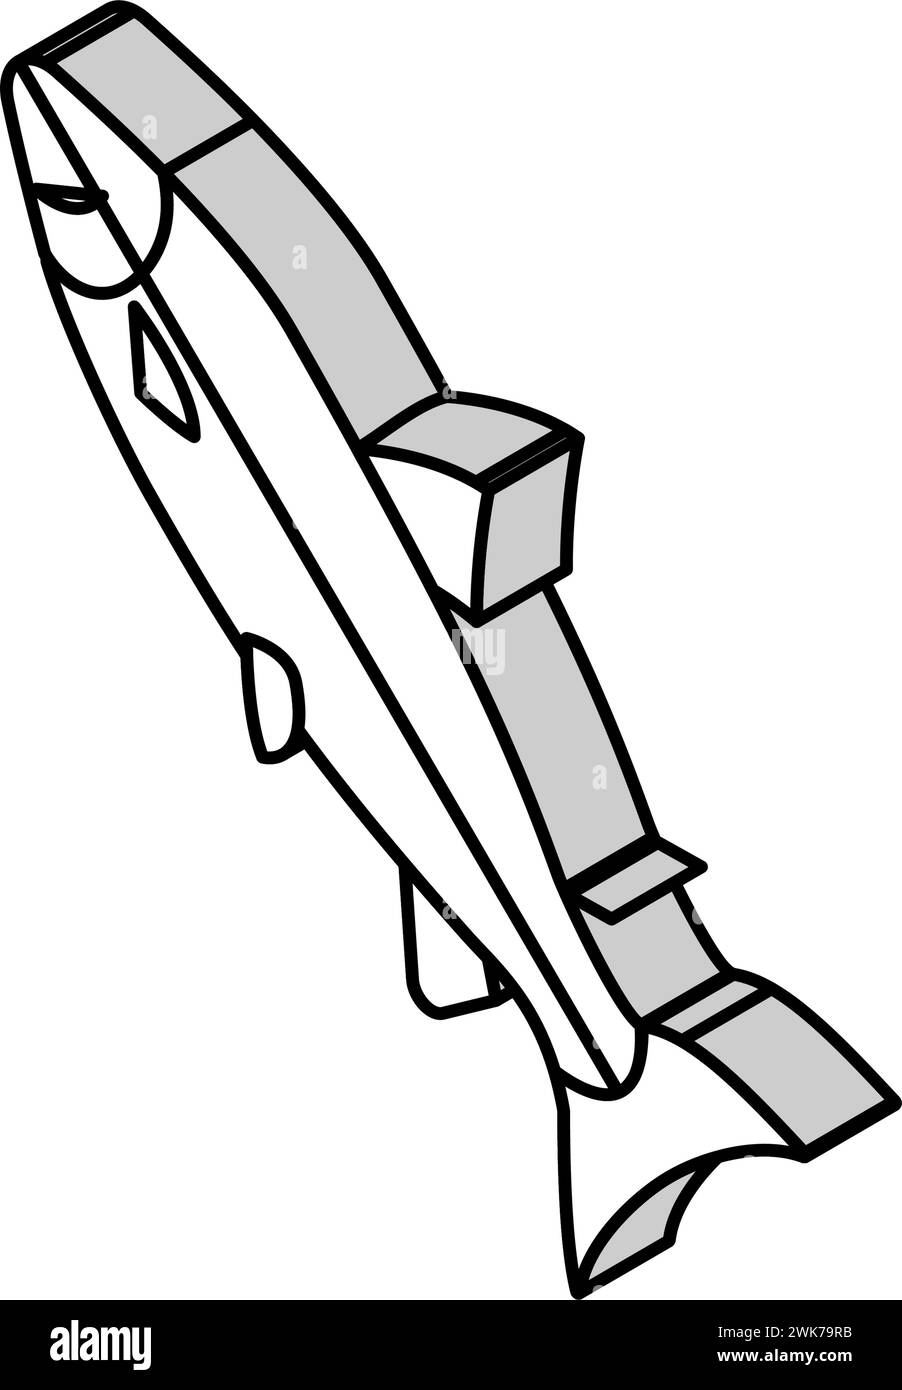 Isometrische Ikonen-Vektor-Illustration des atlantischen Lachses Stock Vektor